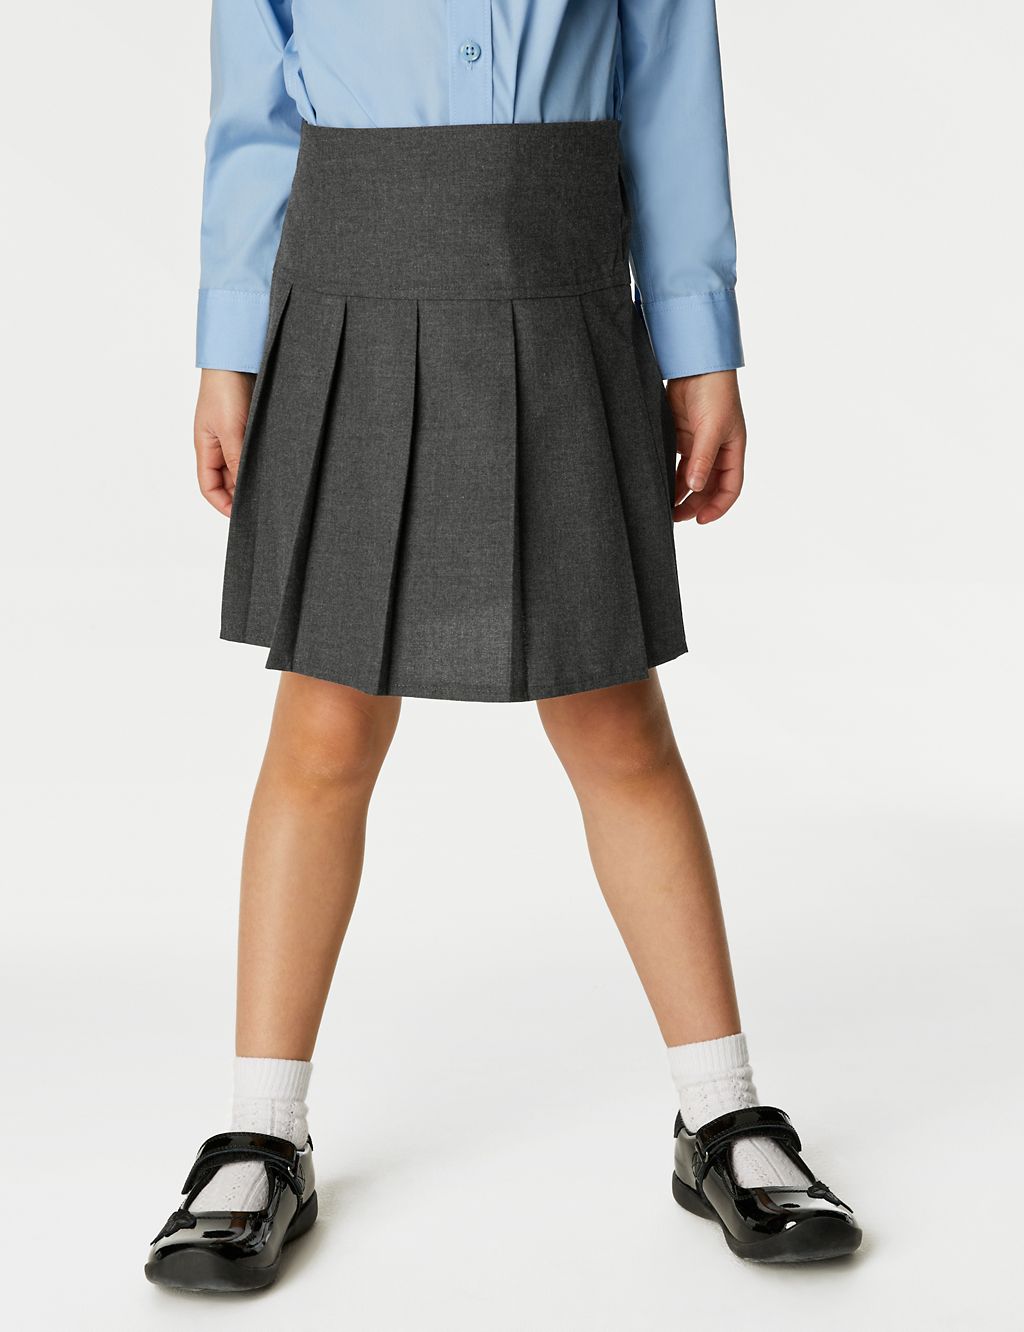 2pk Girls' Crease Resistant School Skirts (2-16 Yrs) 2 of 5